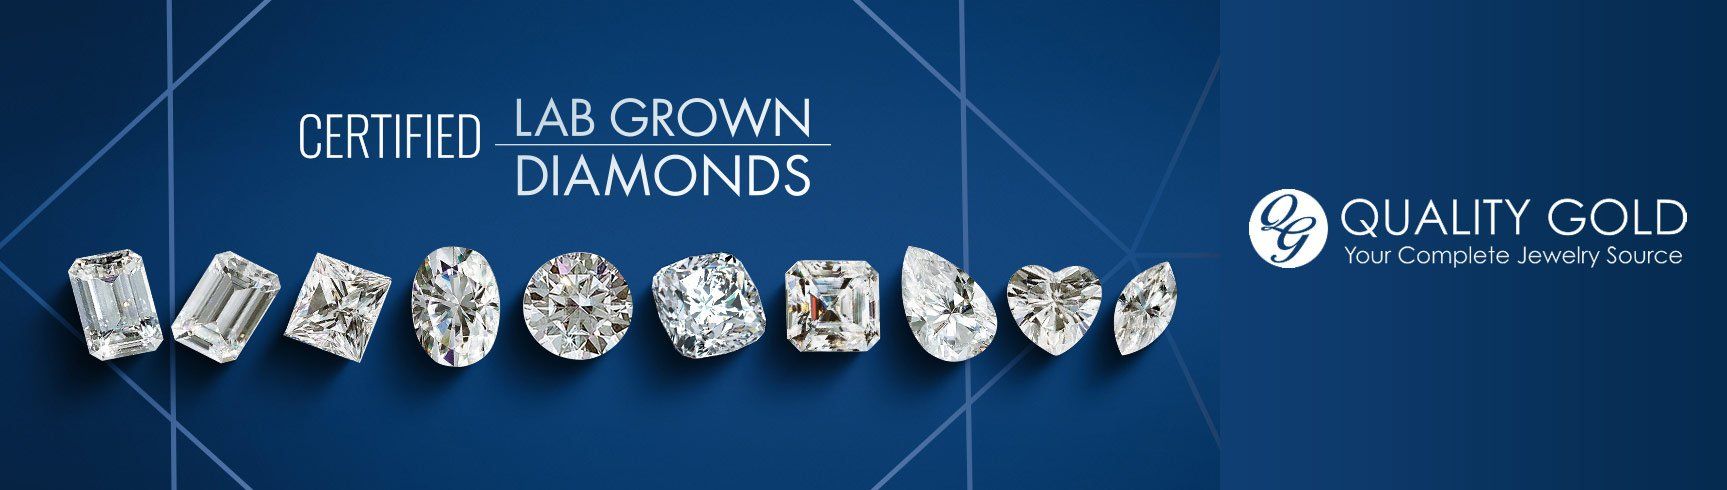 Quality Gold - Lab Grown Diamonds banner